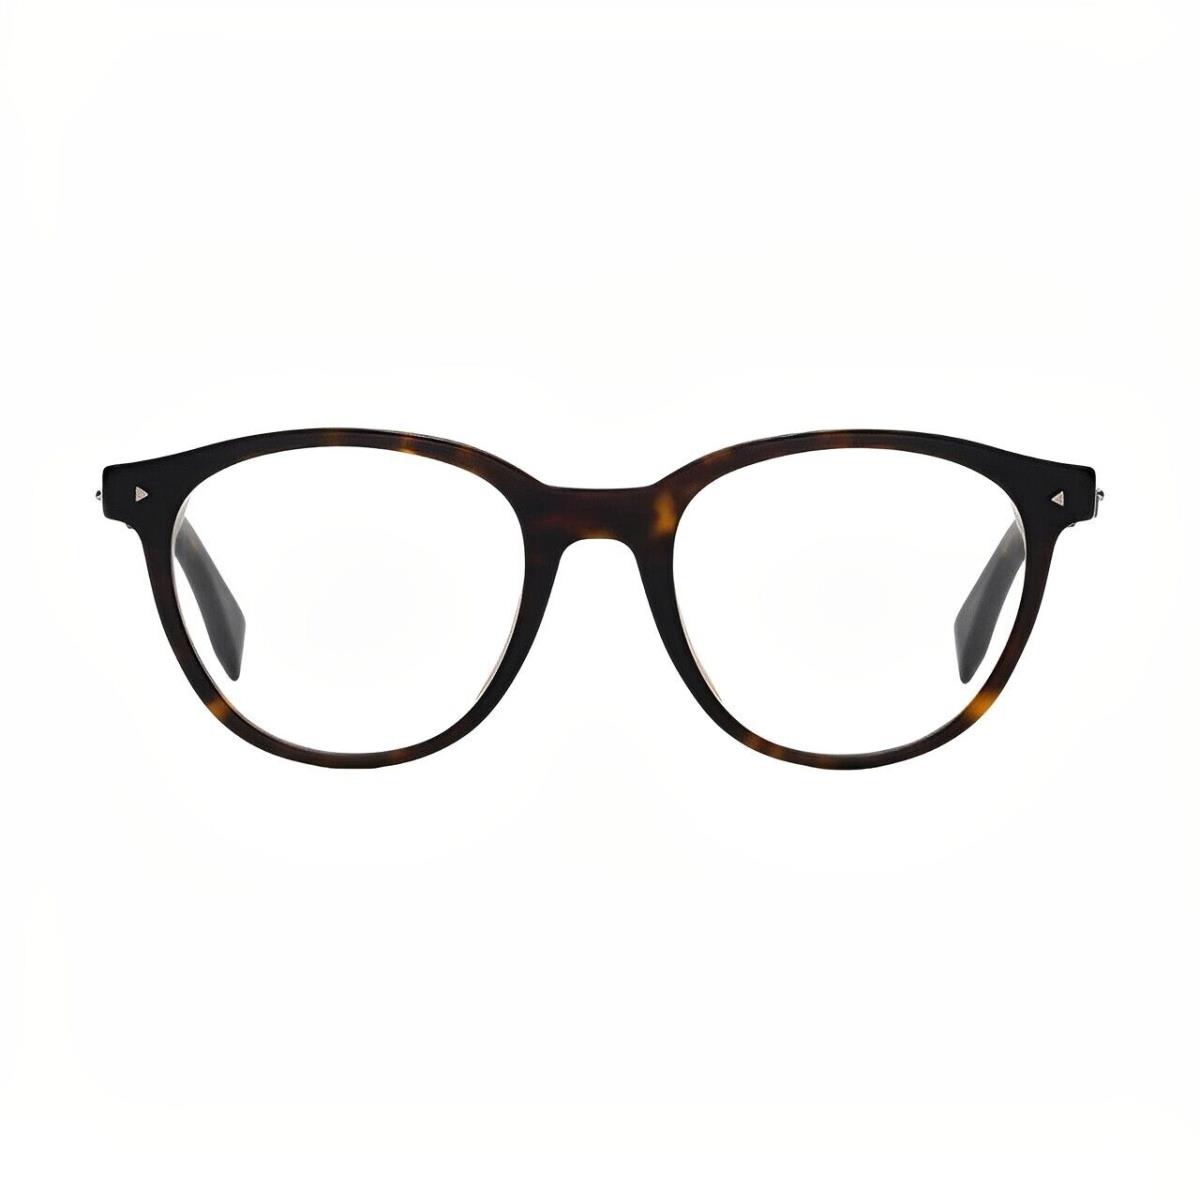 Fendi Eyeglasses - FF M0019/F 0086 - Dark Havana 51-20-145 Asian Fit